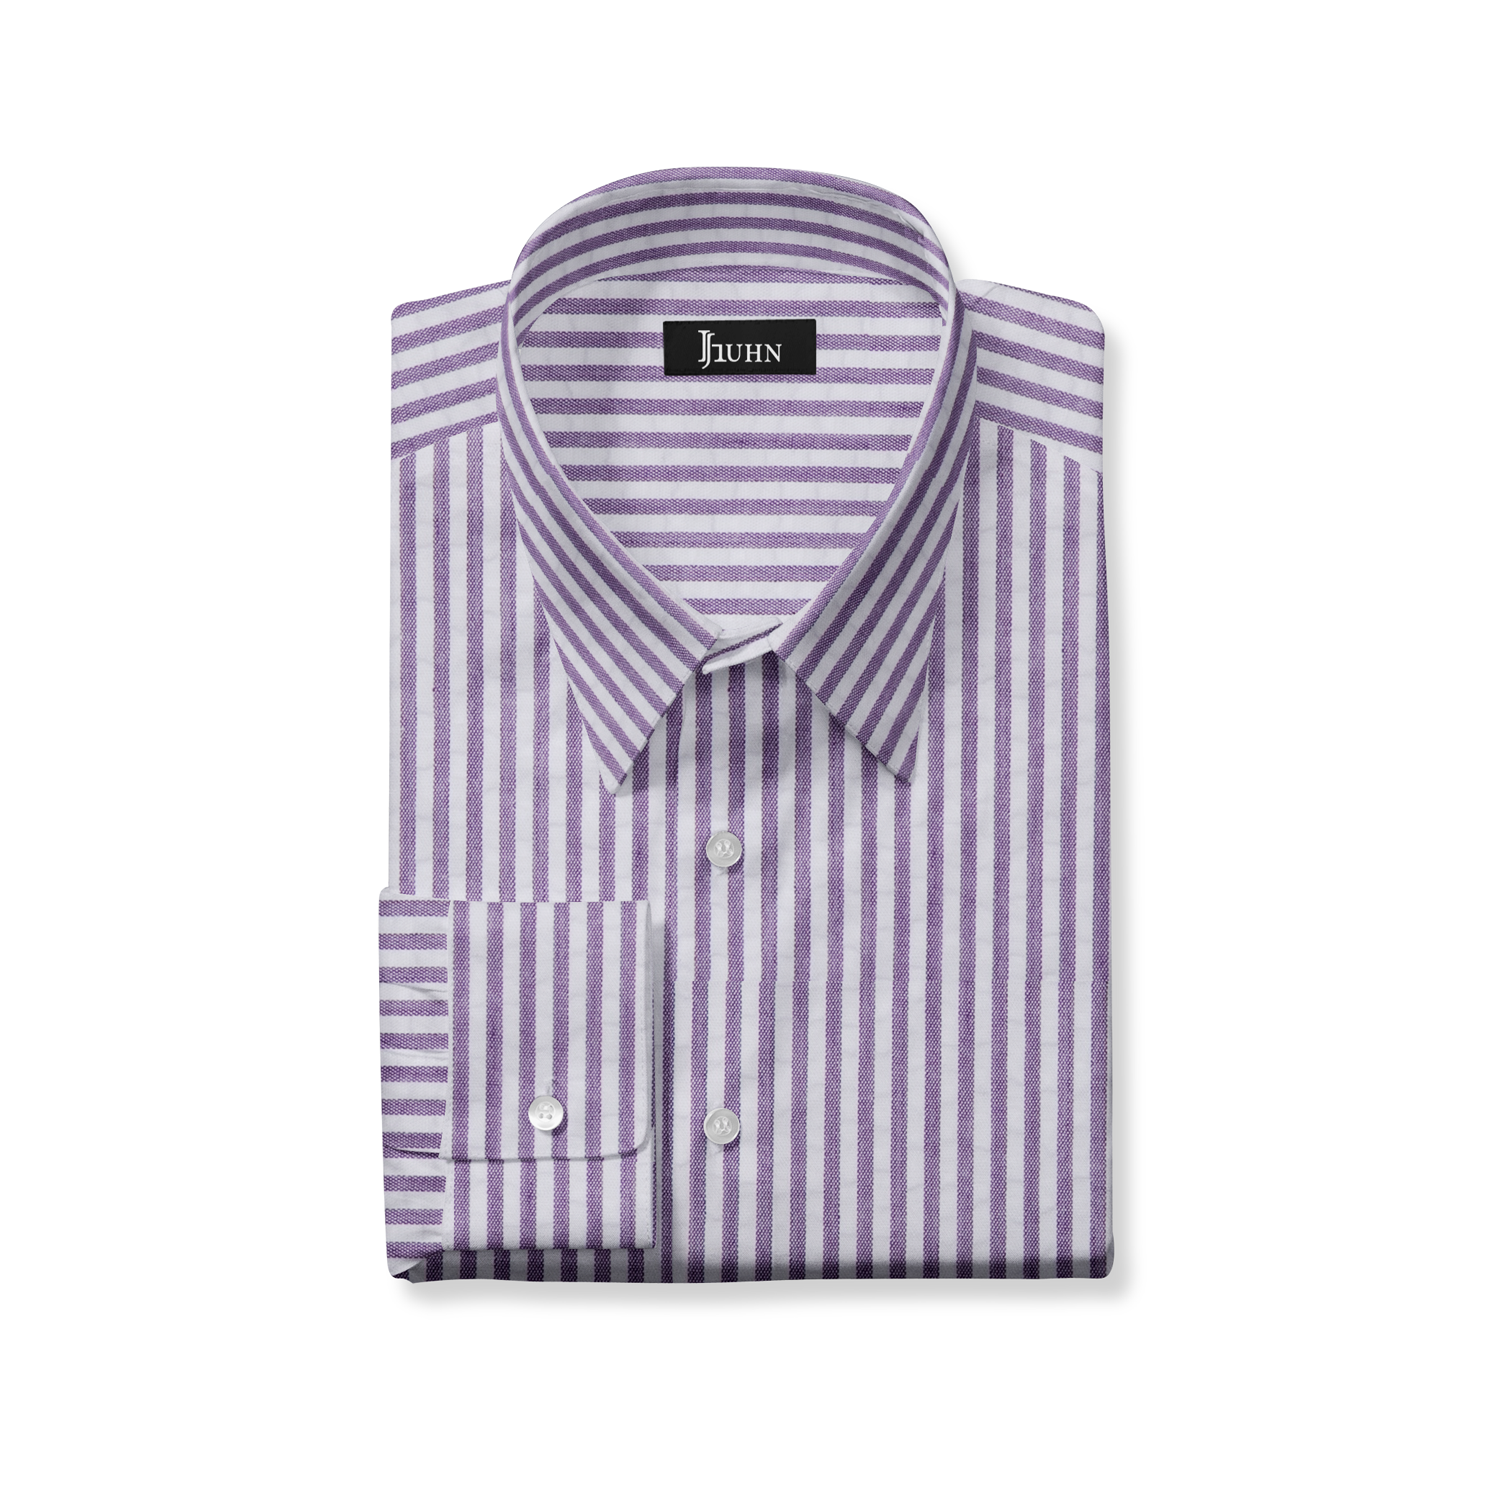 Seersucker Men's Shirt in Purple Stripe